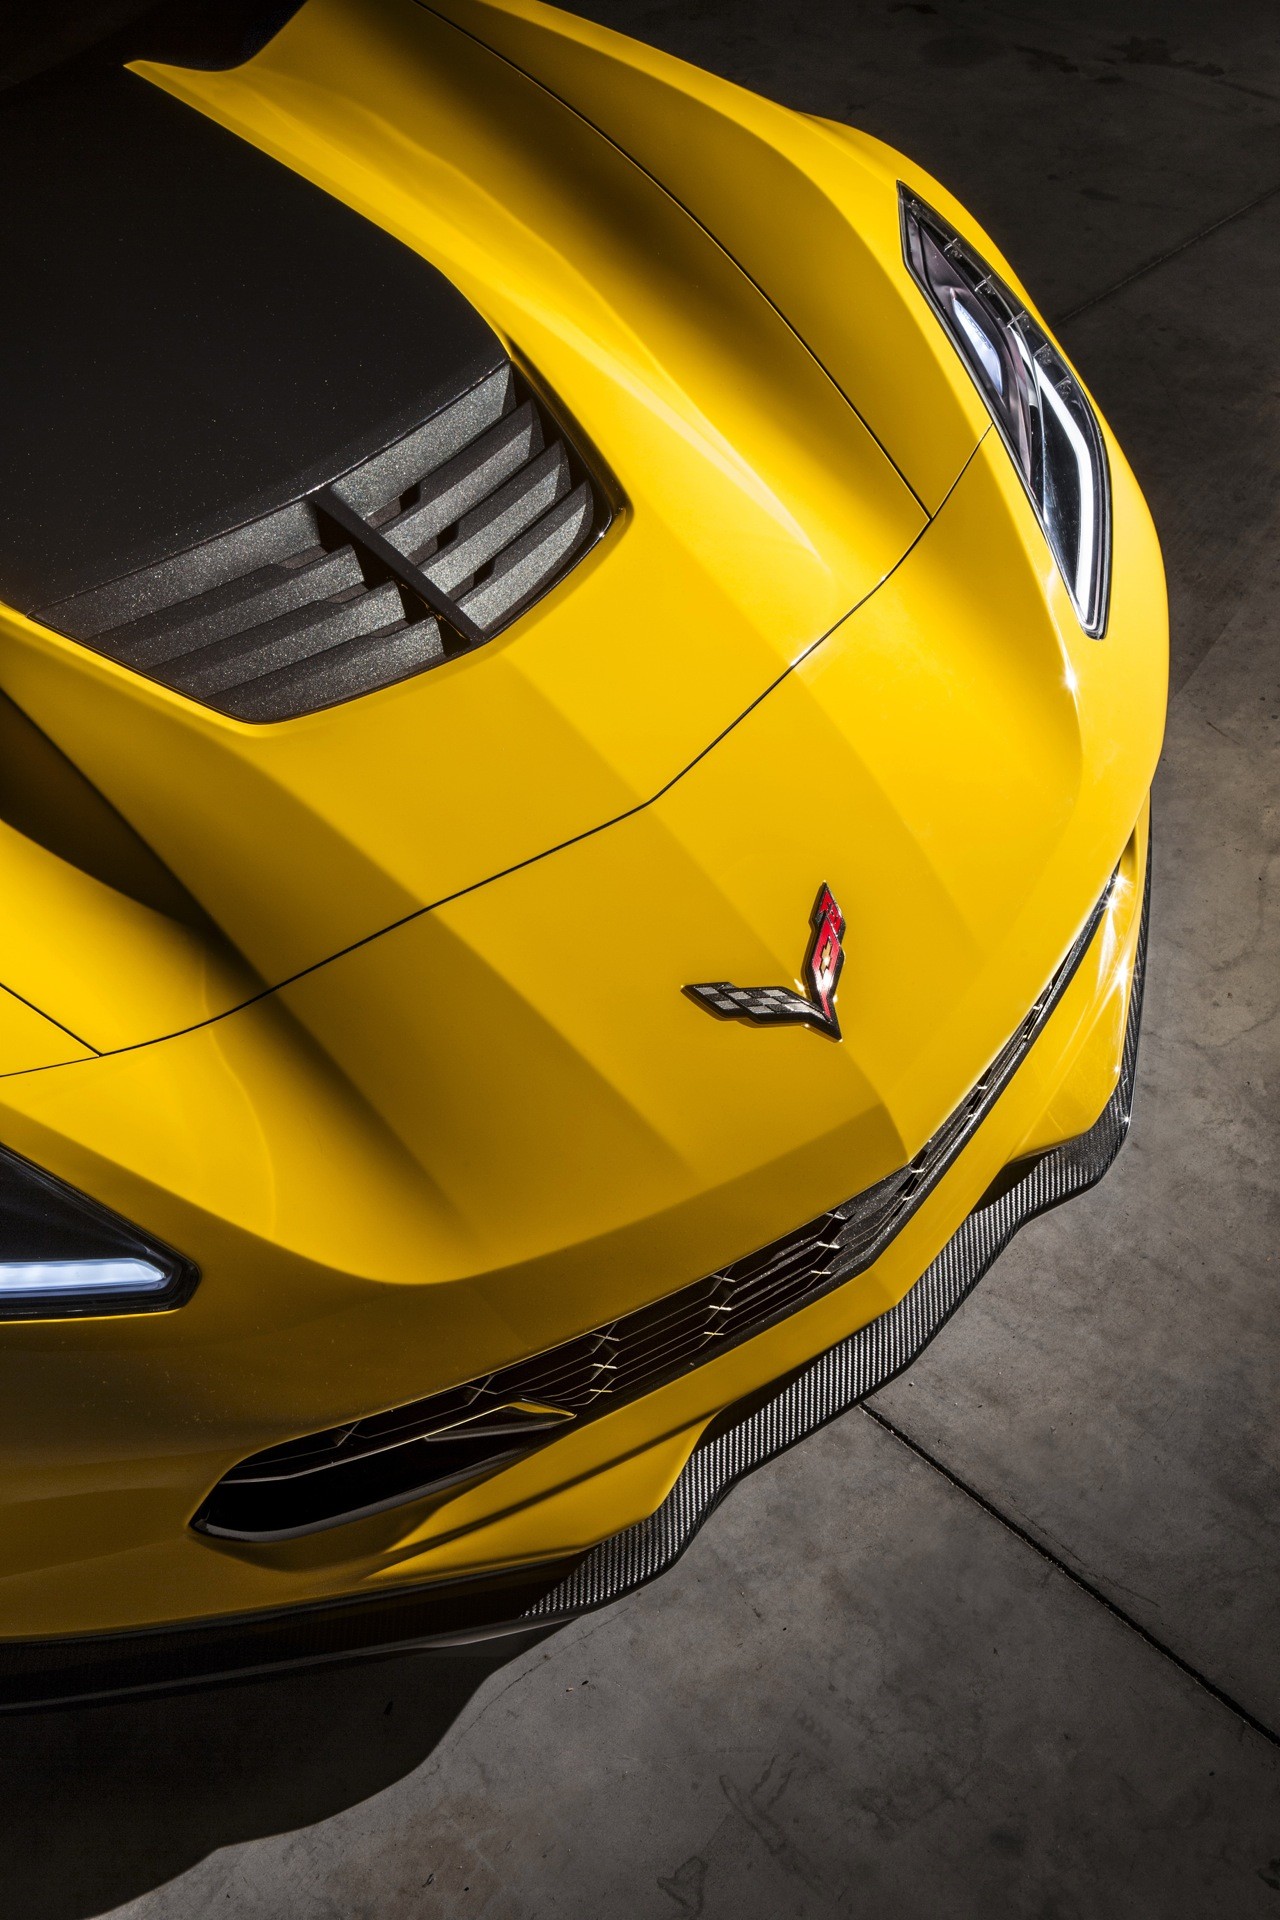 Corvette C7 Z06 Wallpaper 70 Images